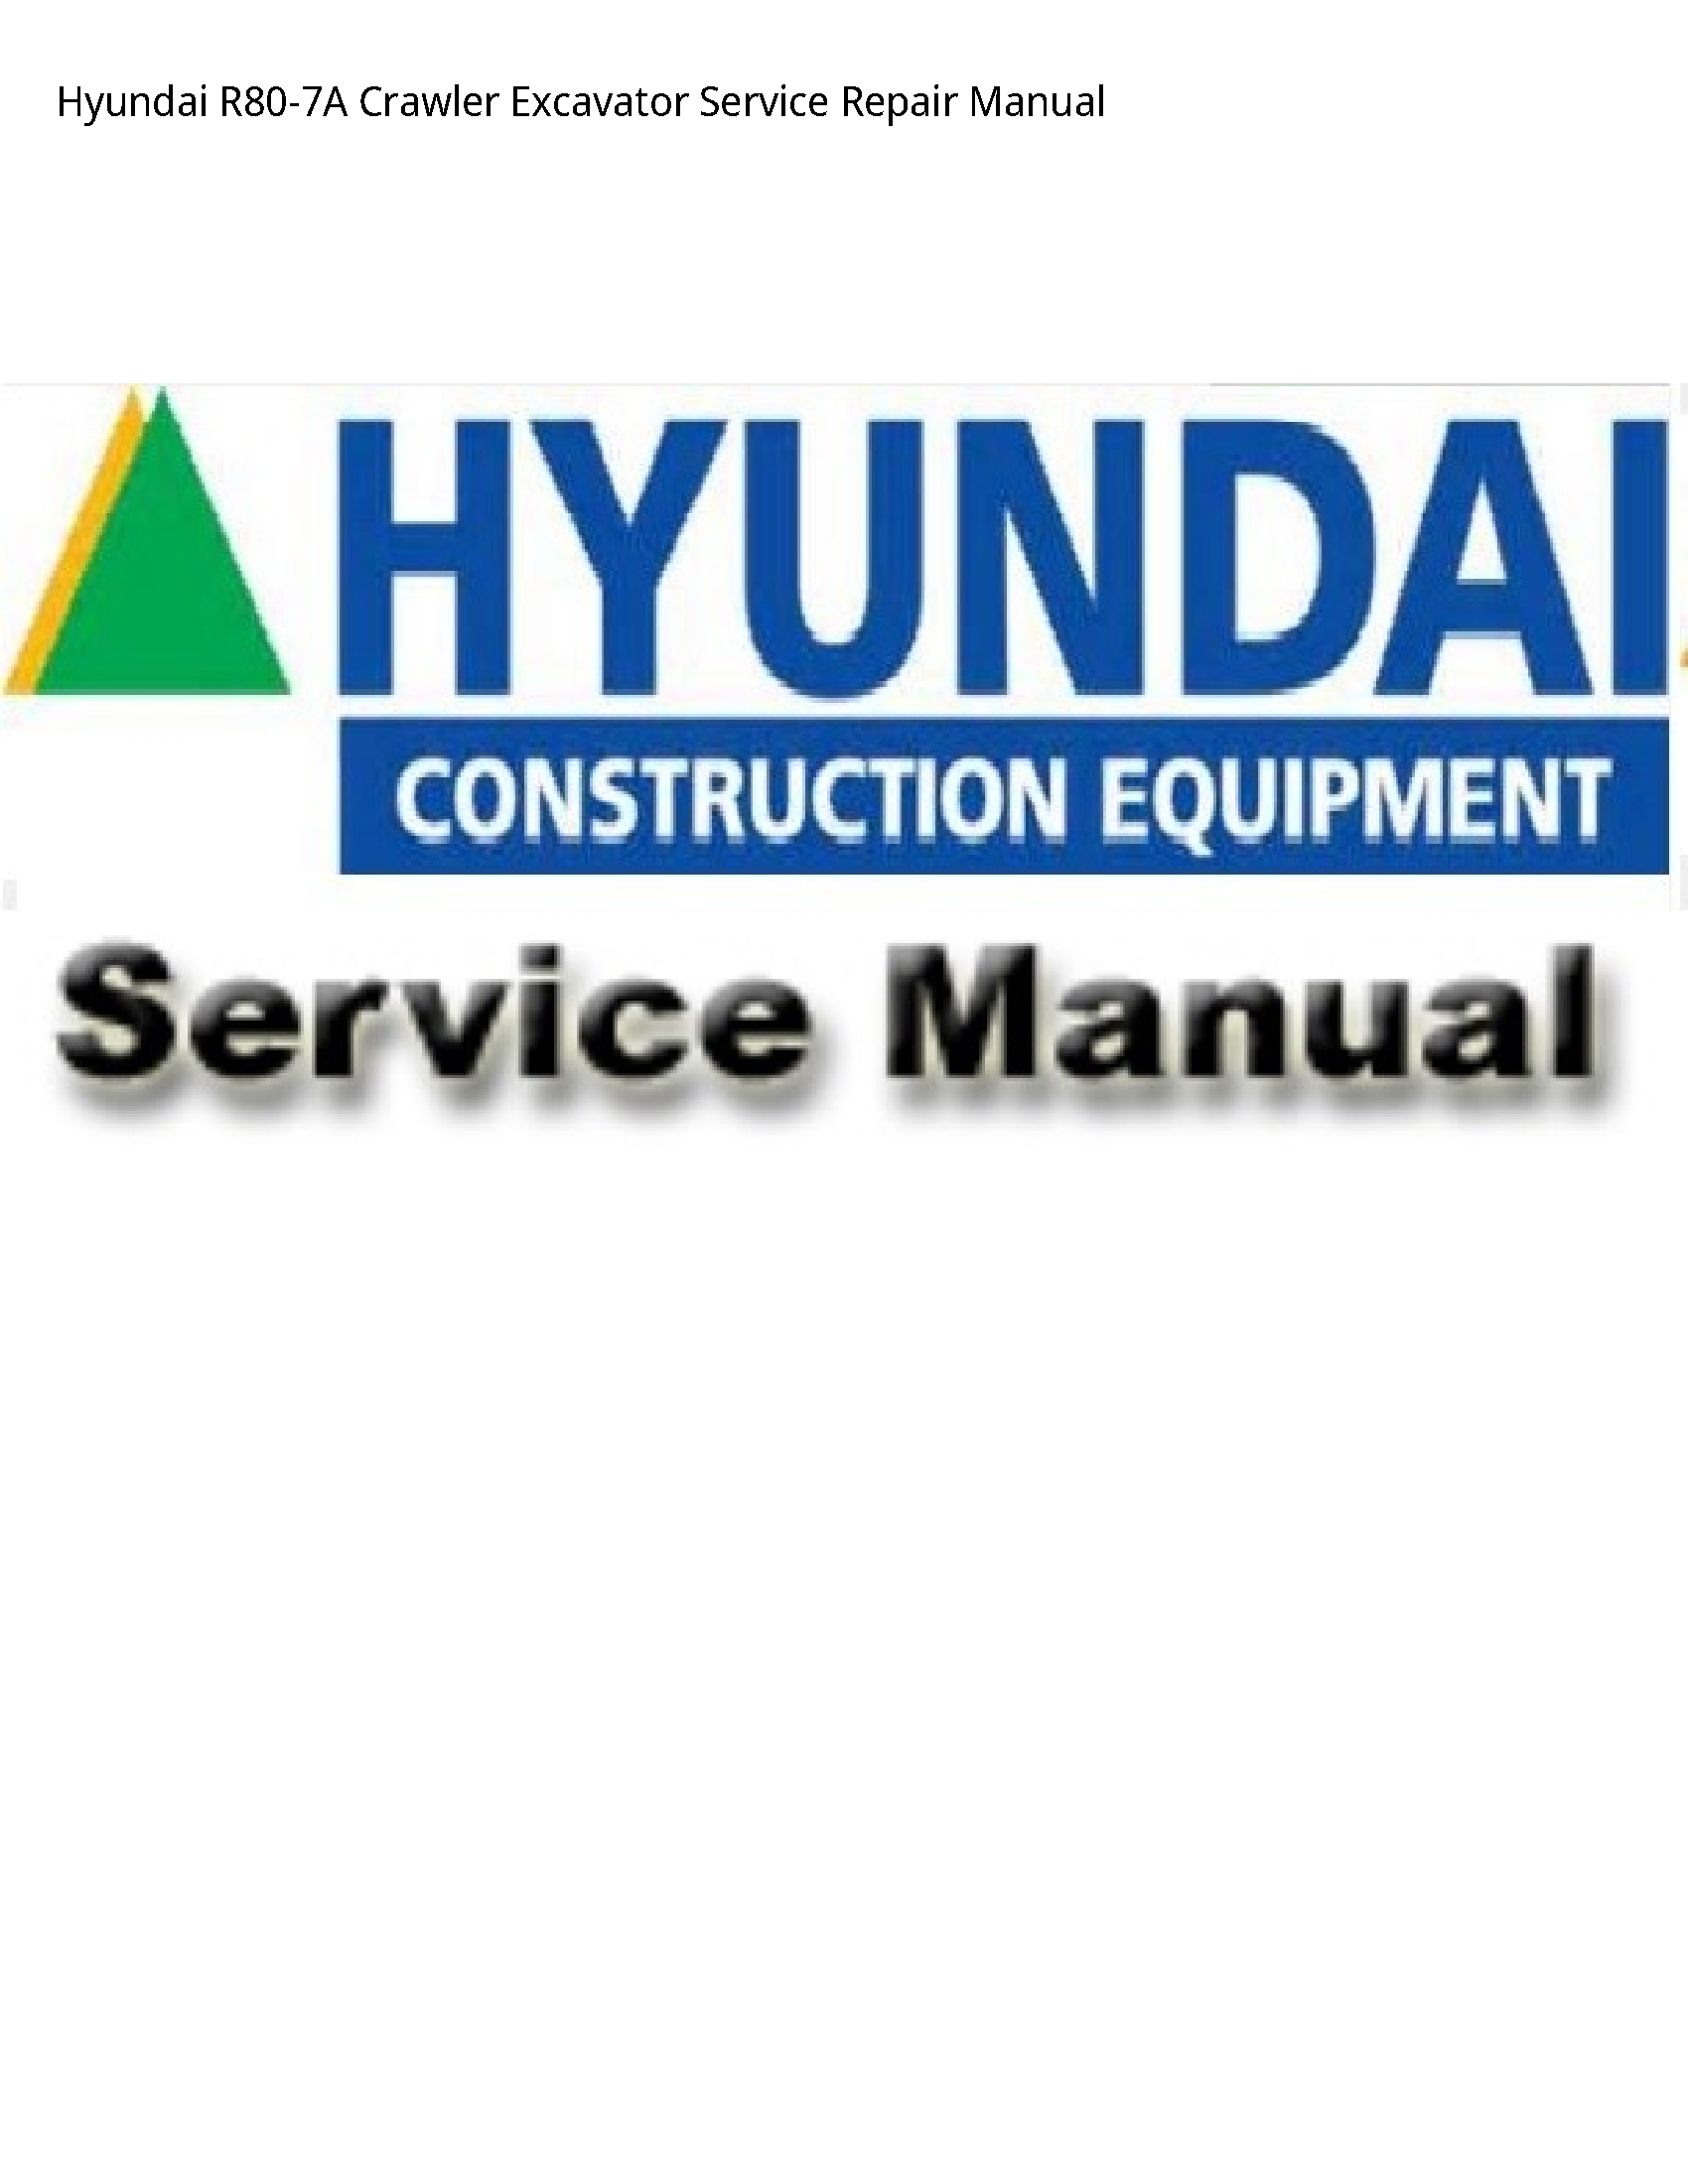 Hyundai R80-7A Crawler Excavator manual